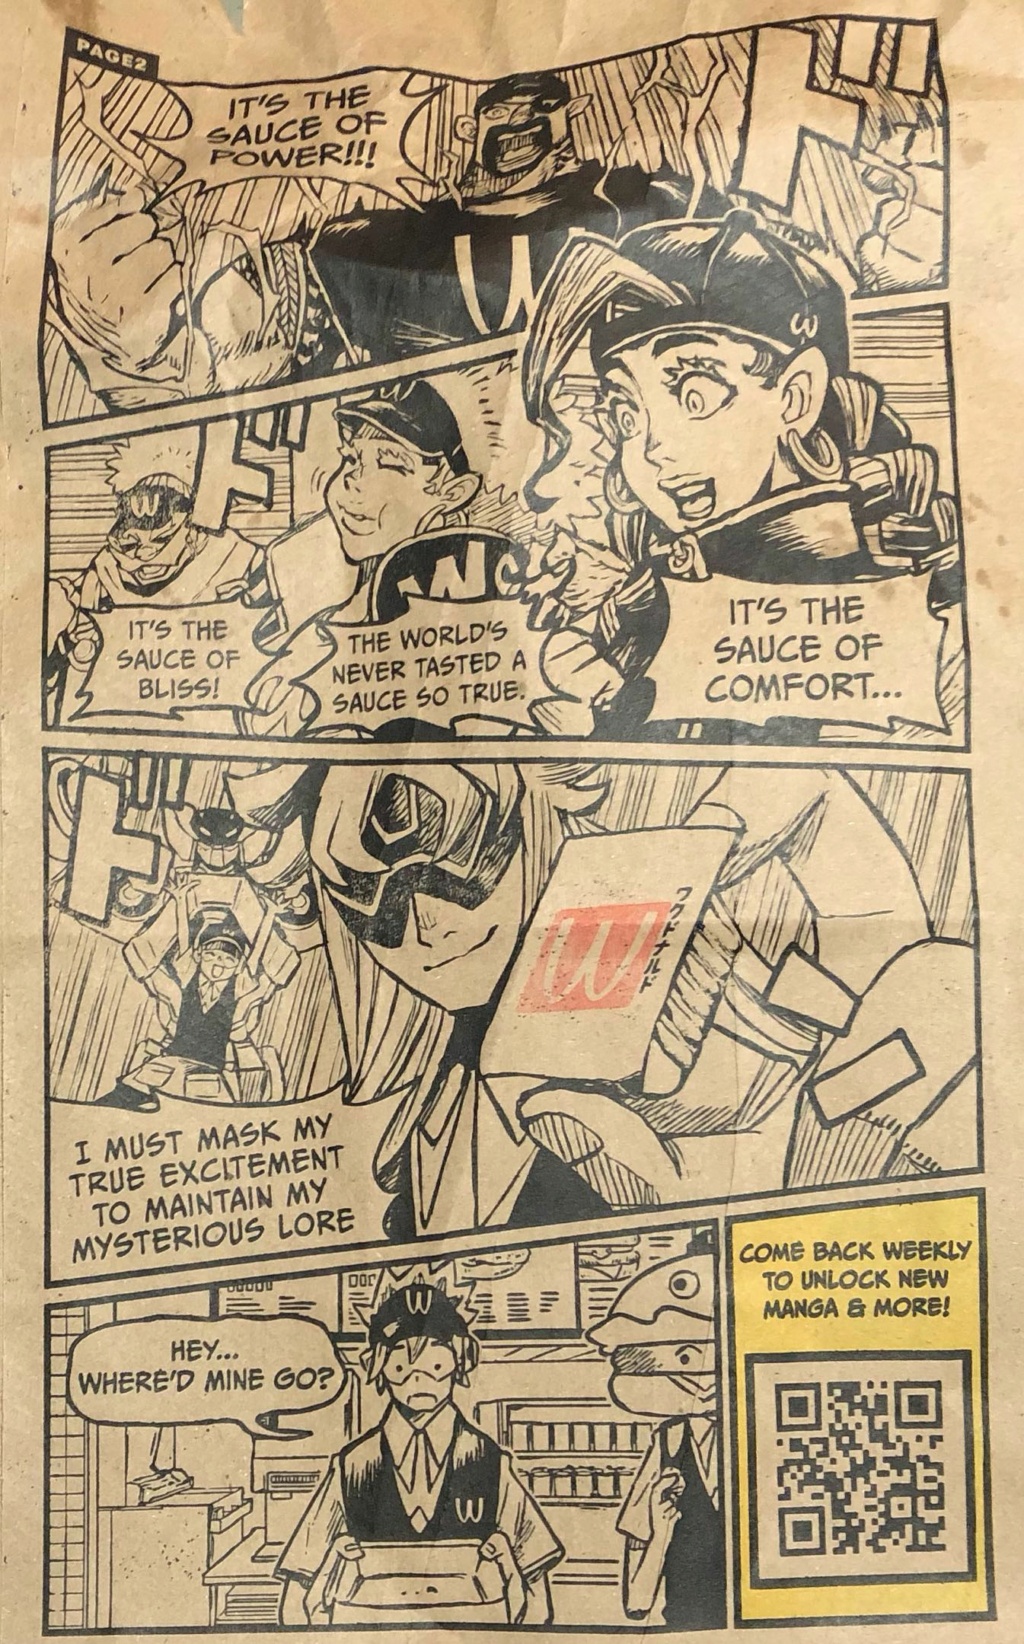 WcDonald's Manga Mcd210